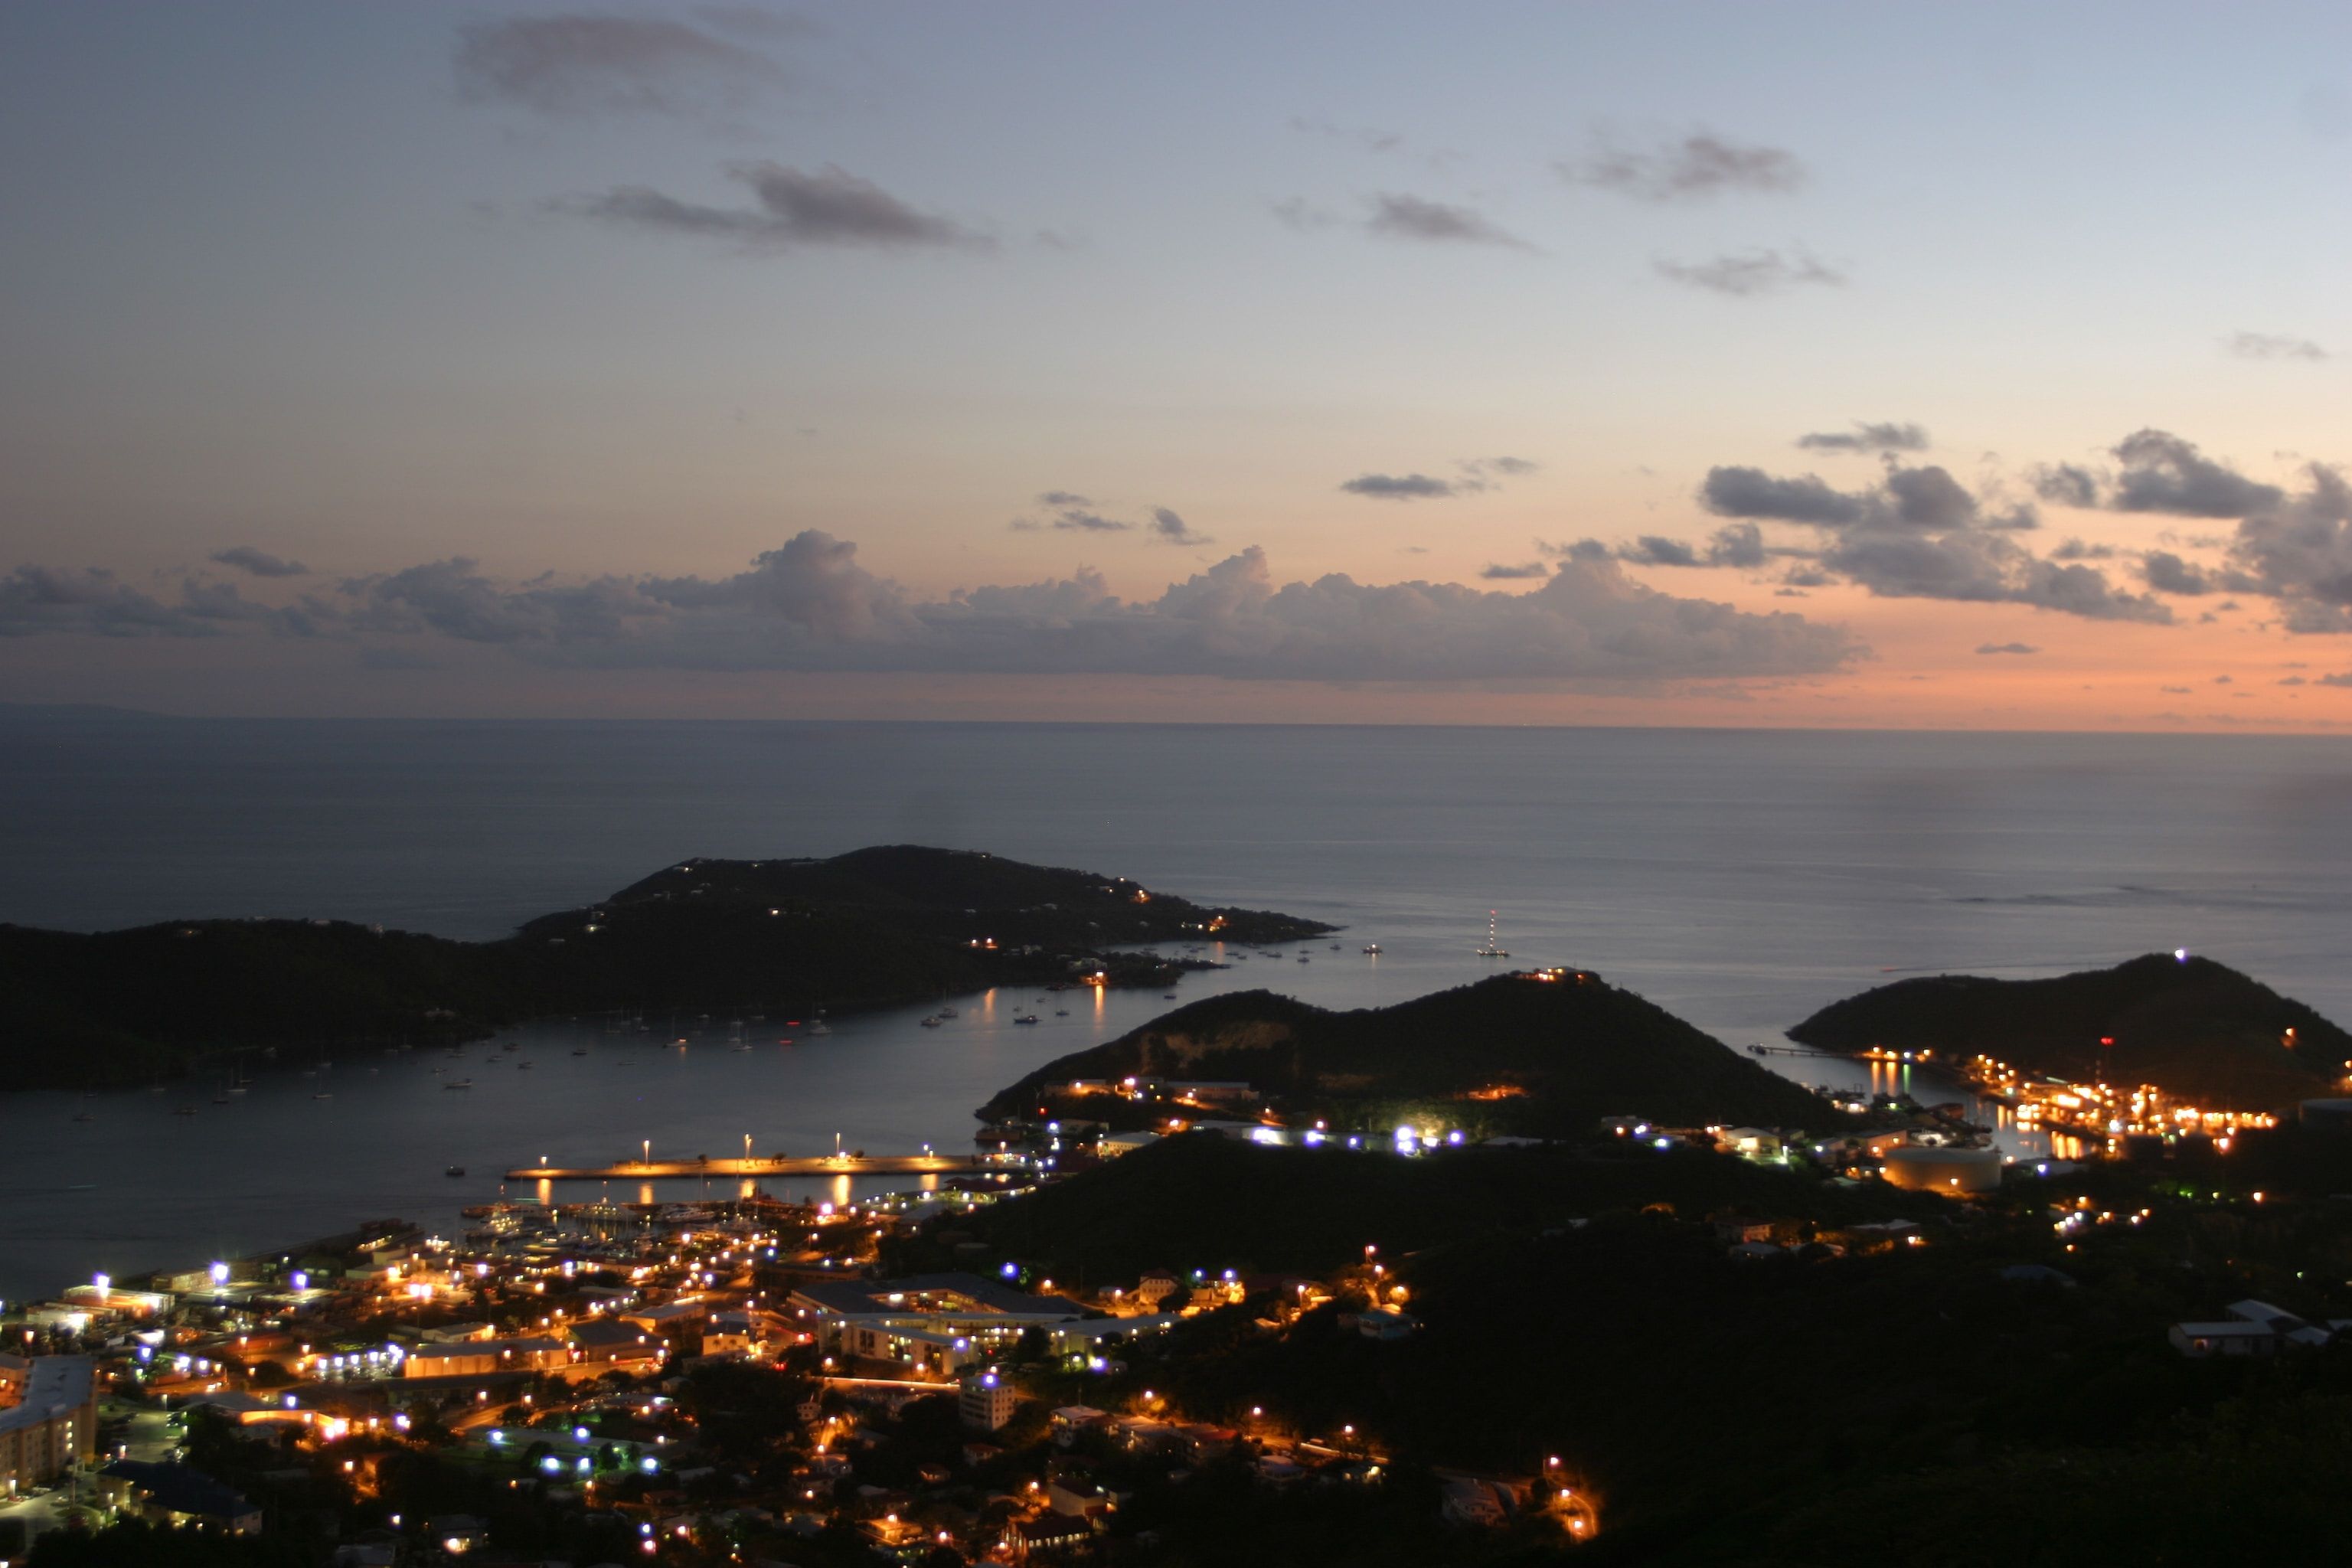 City of St. Thomas U.S. Virgin Islands at night